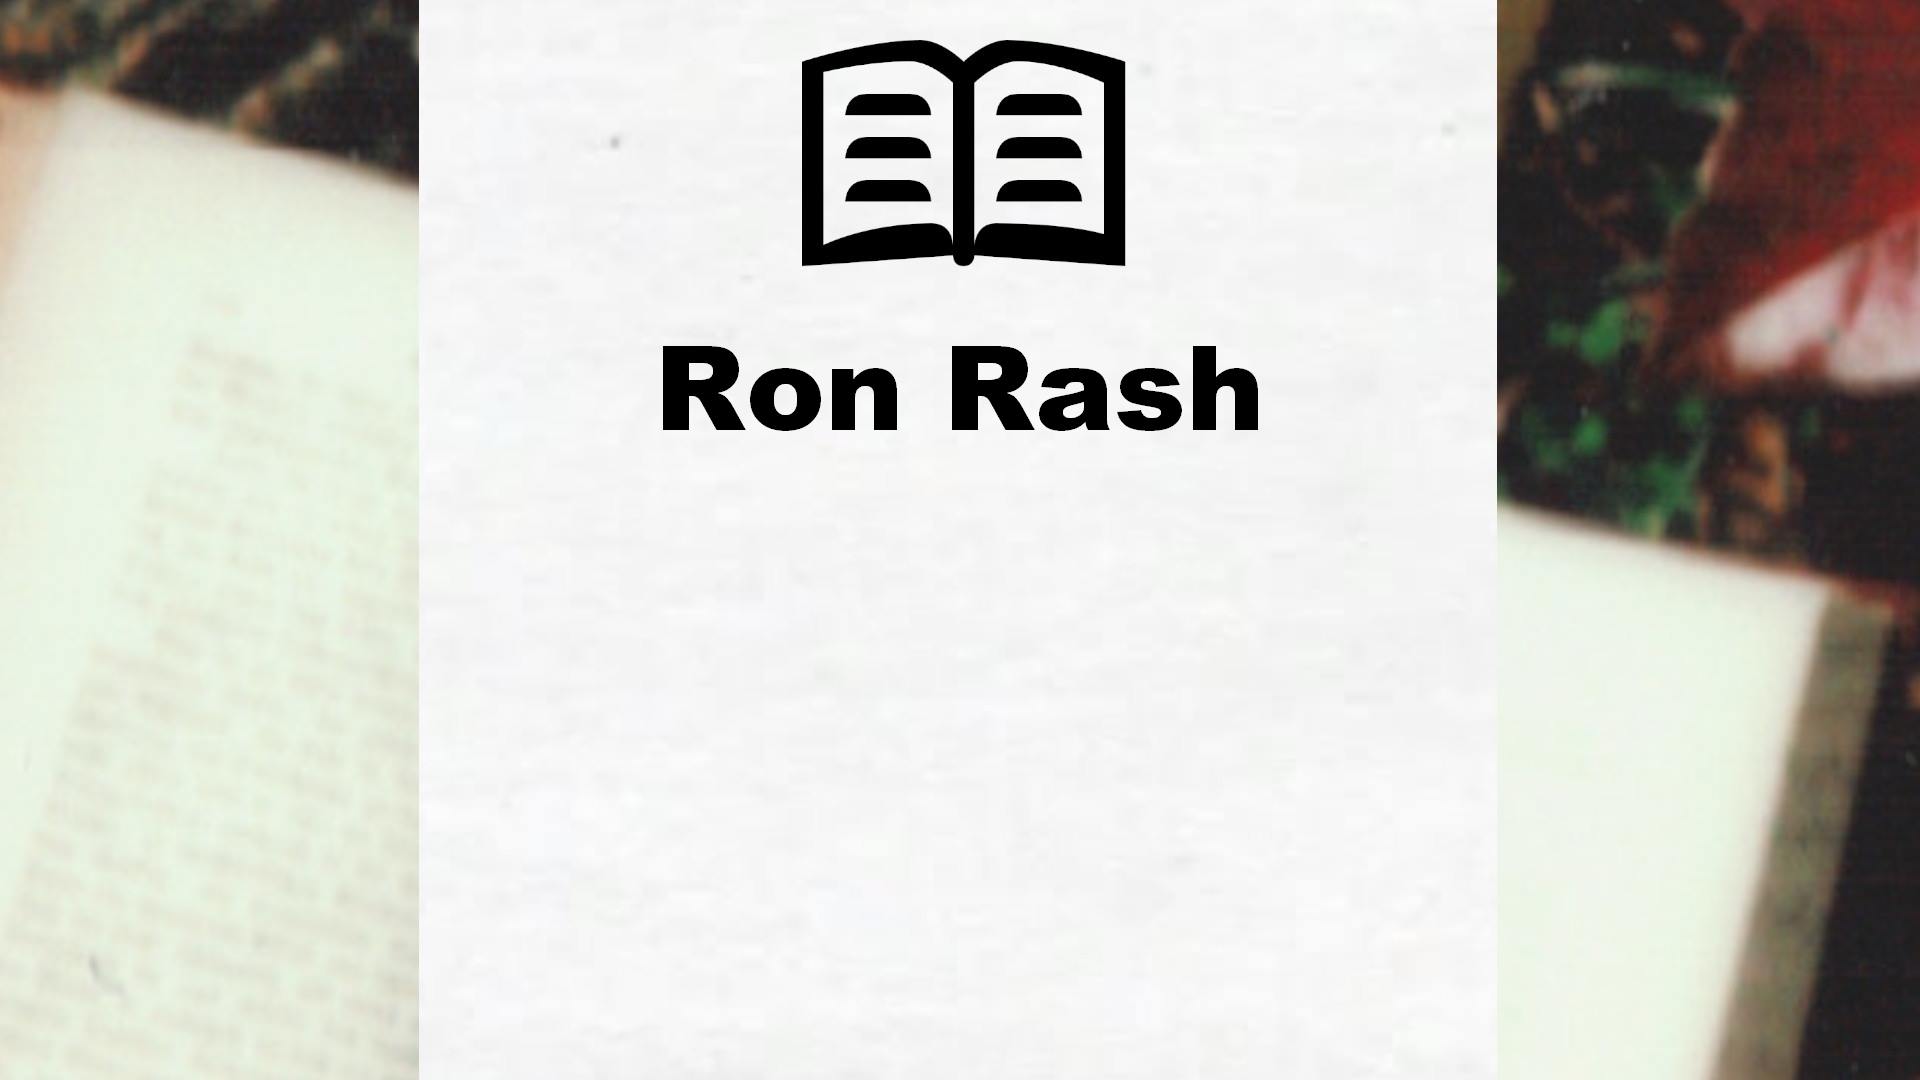 Livres de Ron Rash